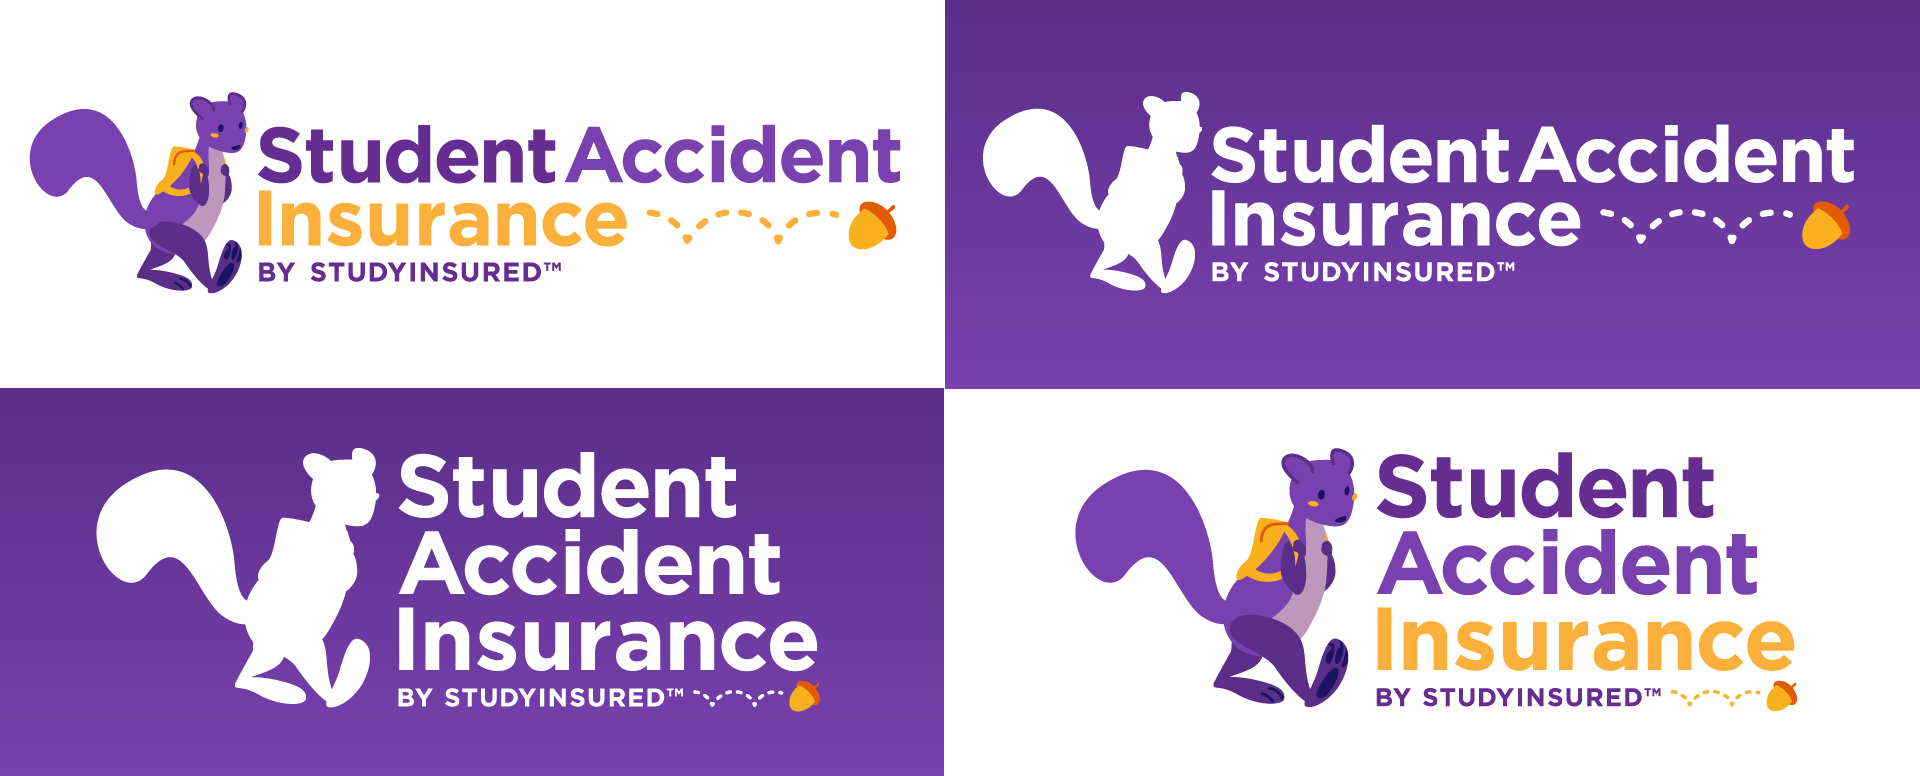 Student Accident Insurance logo treatments